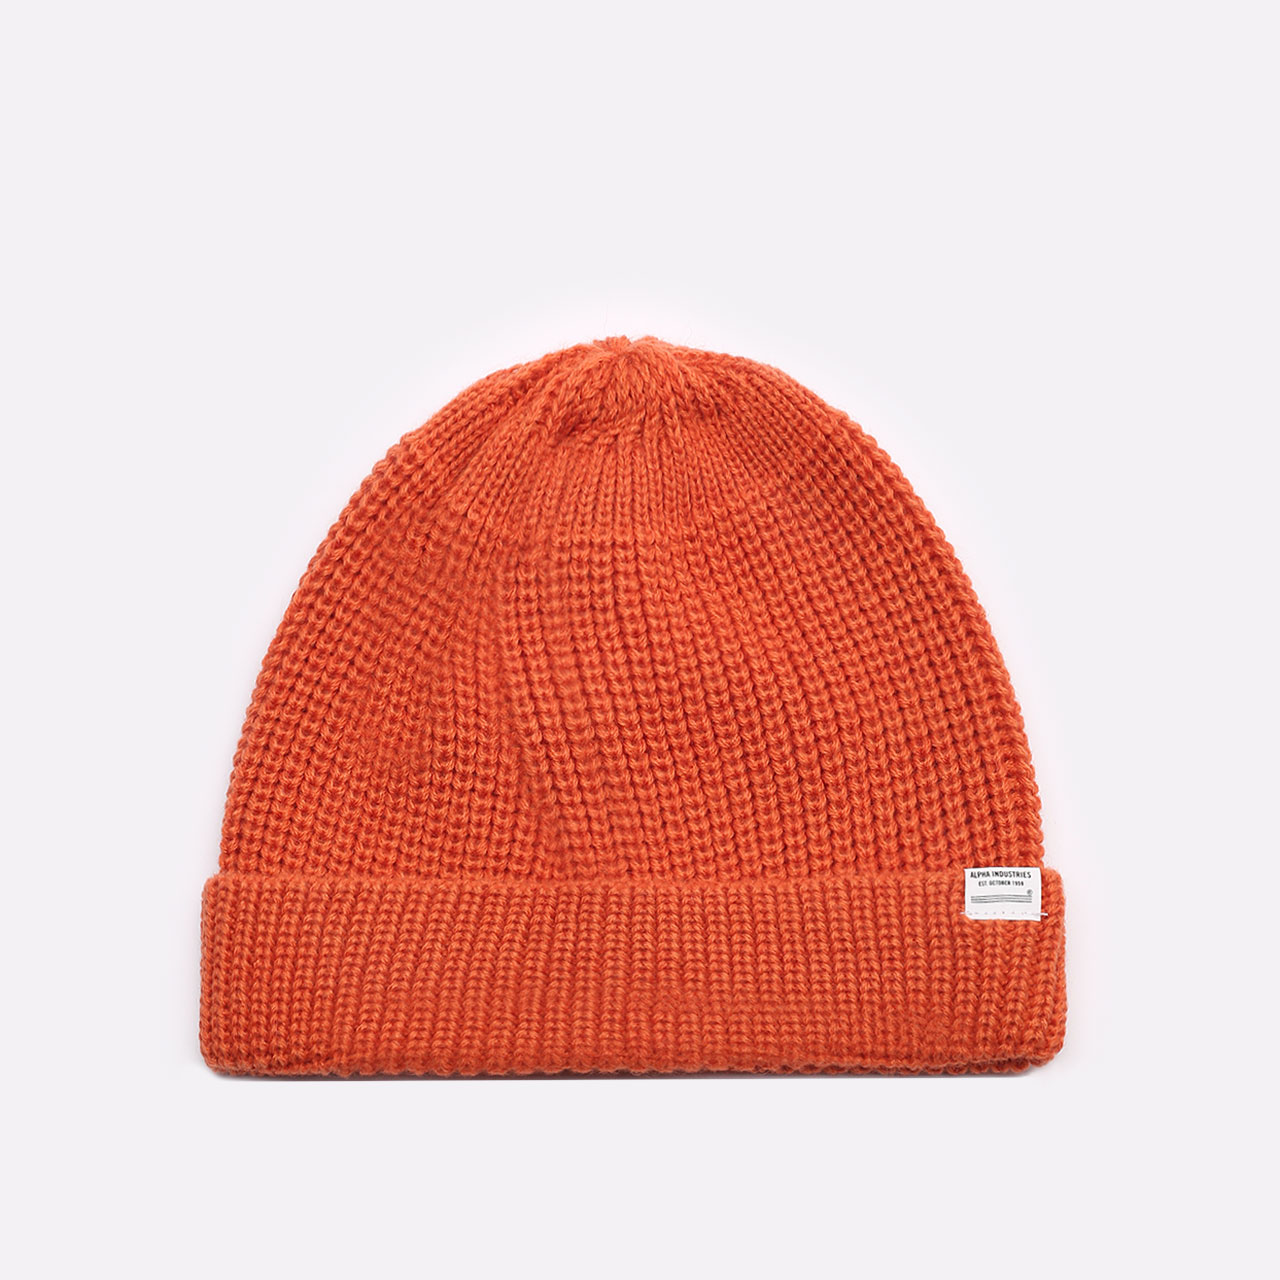  оранжевая шапка Alpha Industries ESSENTIAL WATCH Шапка UHE51501C1-orange - цена, описание, фото 1